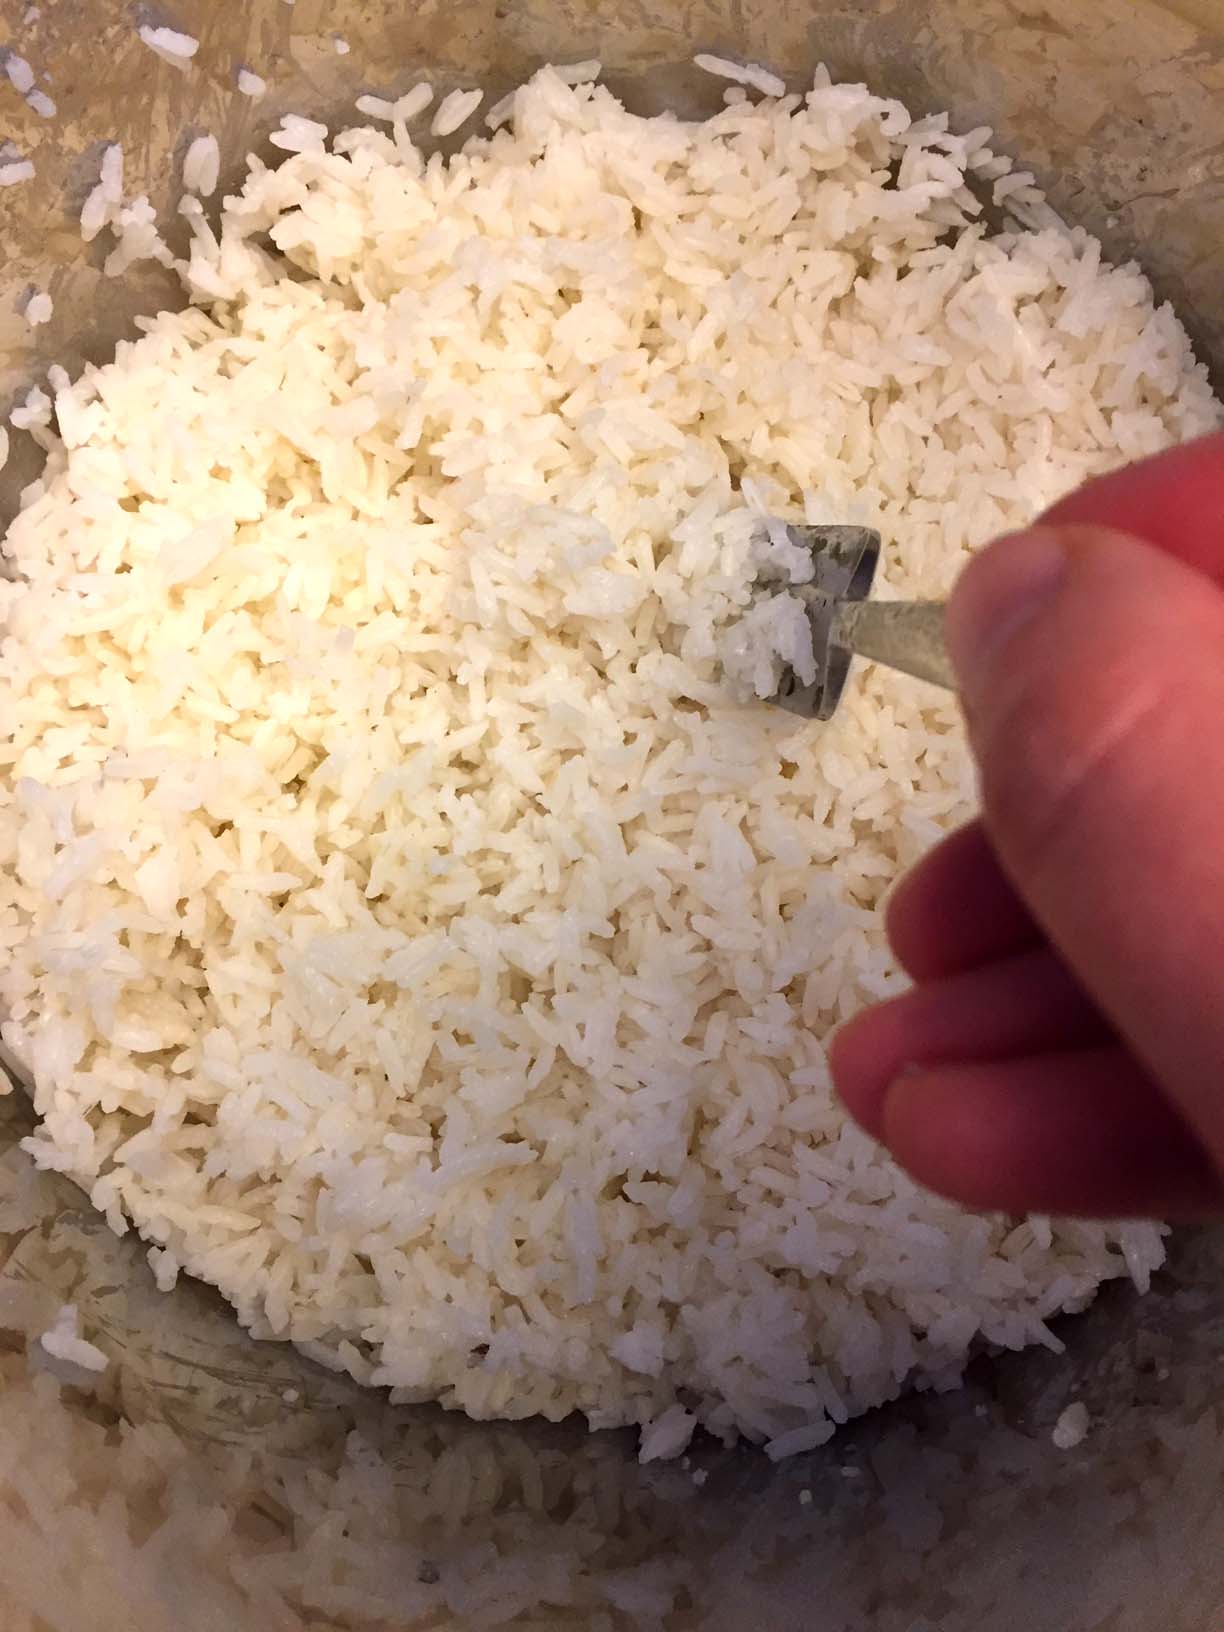 https://www.melaniecooks.com/wp-content/uploads/2018/01/instant_pot_white_rice_cooking.jpg